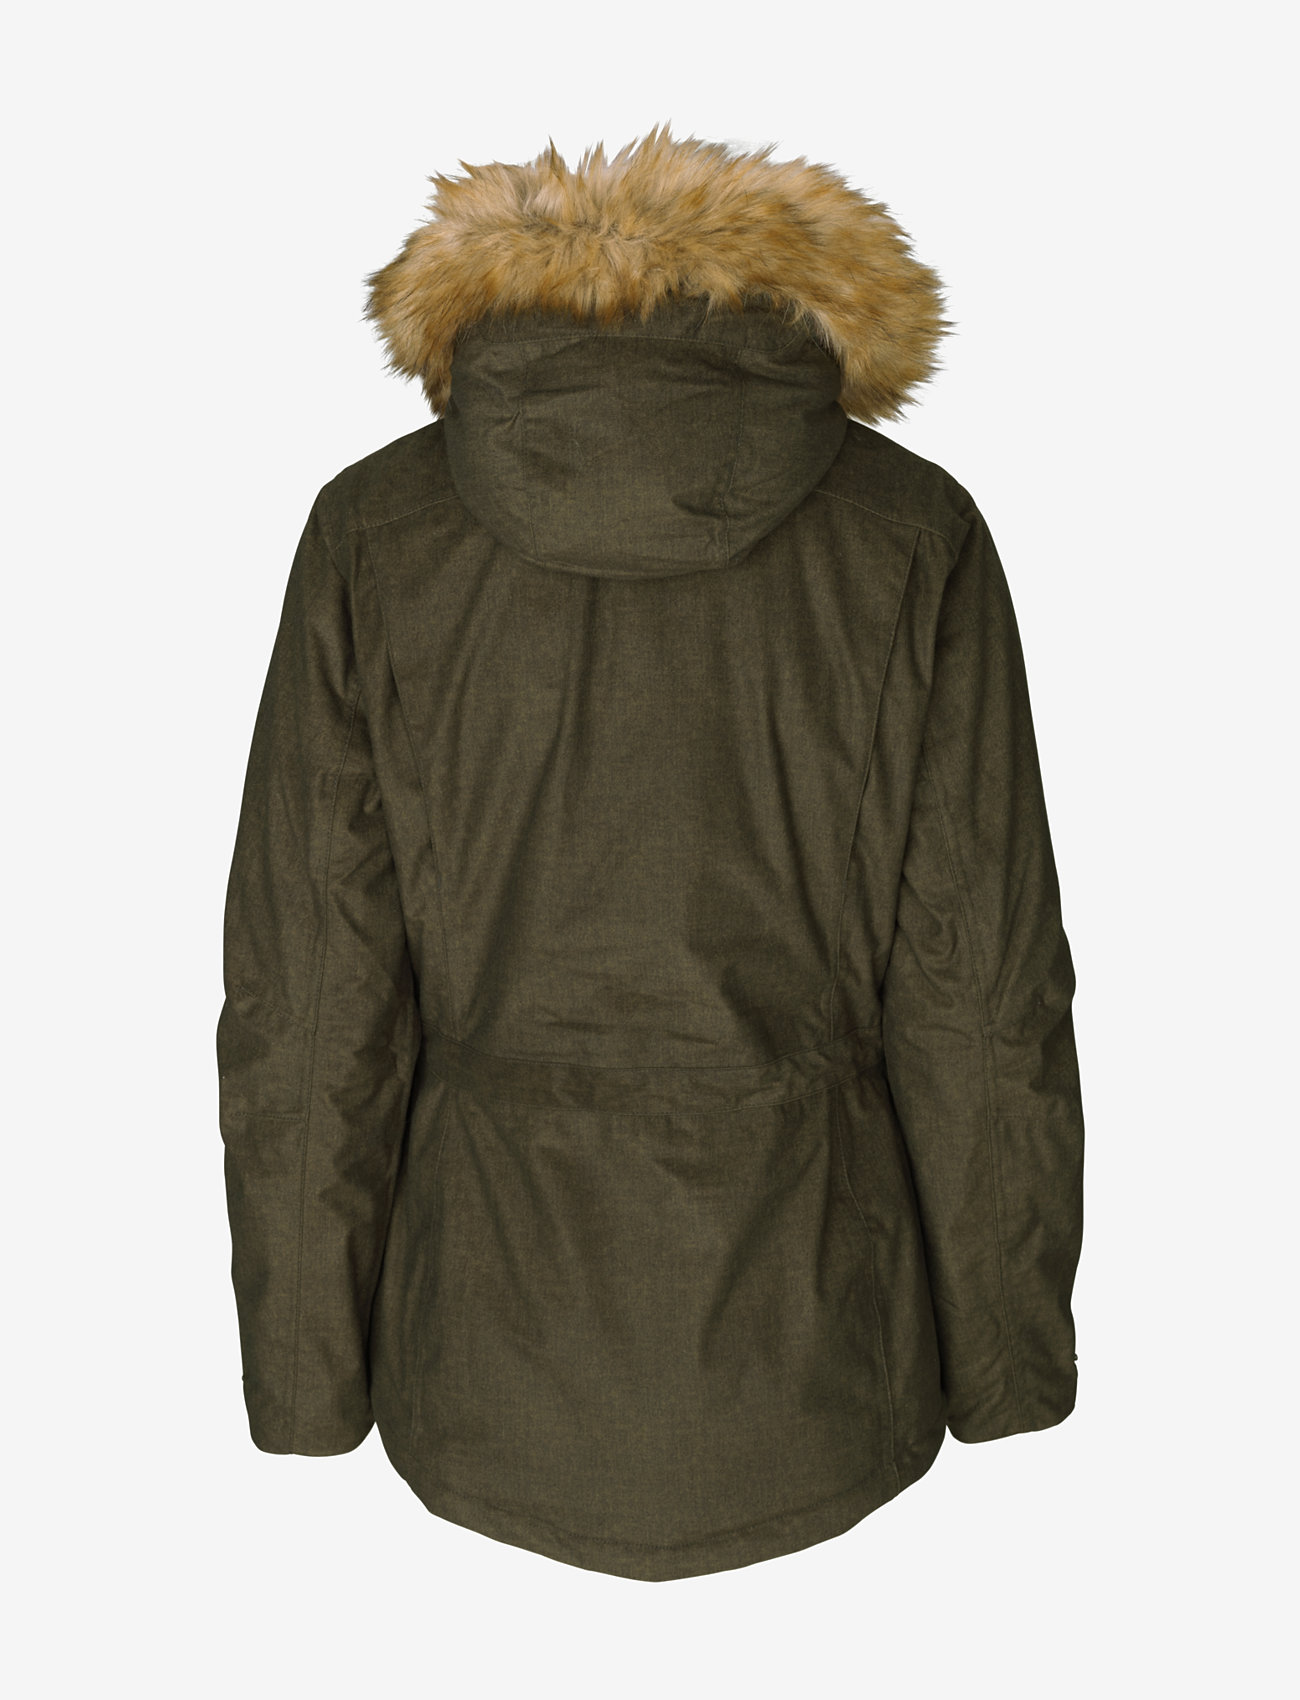 Seeland - North Lady jacket - parkad - pine green - 1